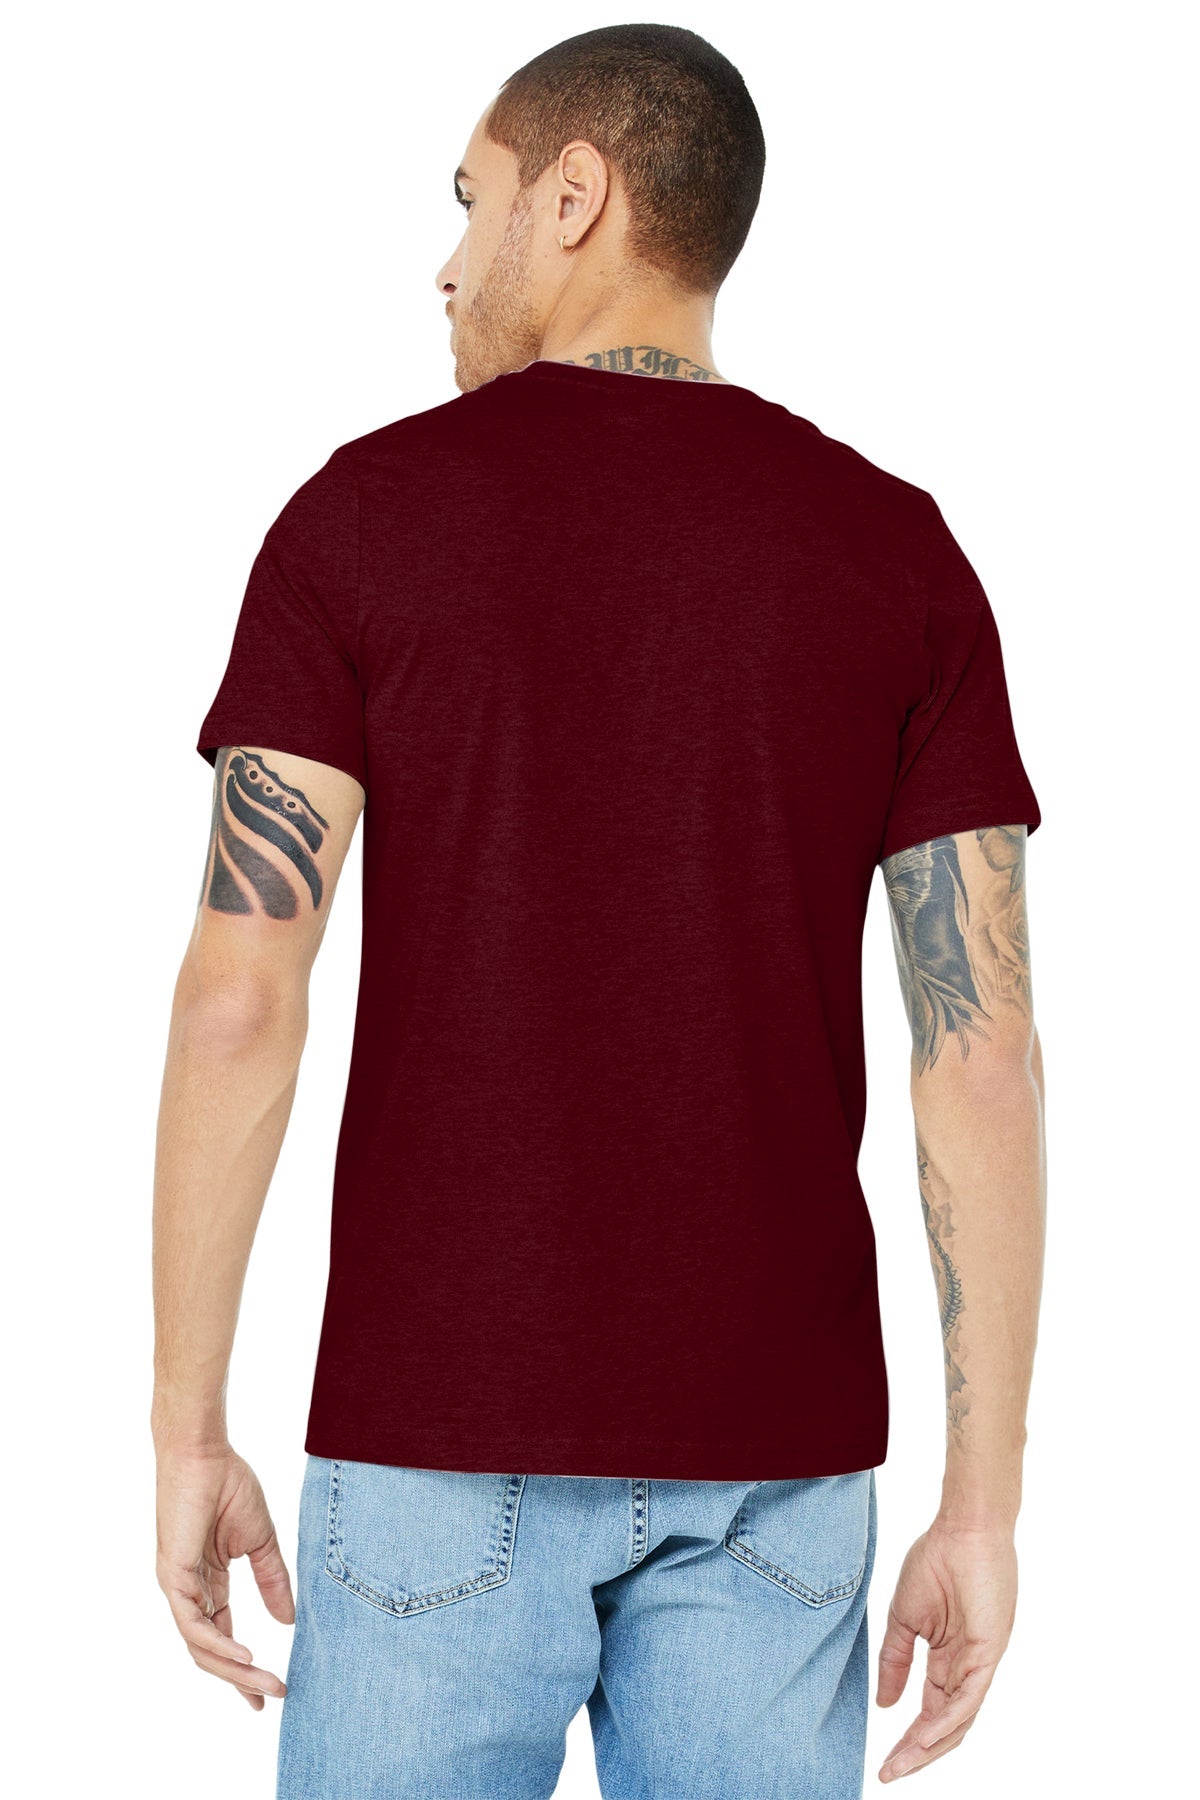 bella + canvas unisex jersey short sleeve t-shirt 3001c heather cardinal